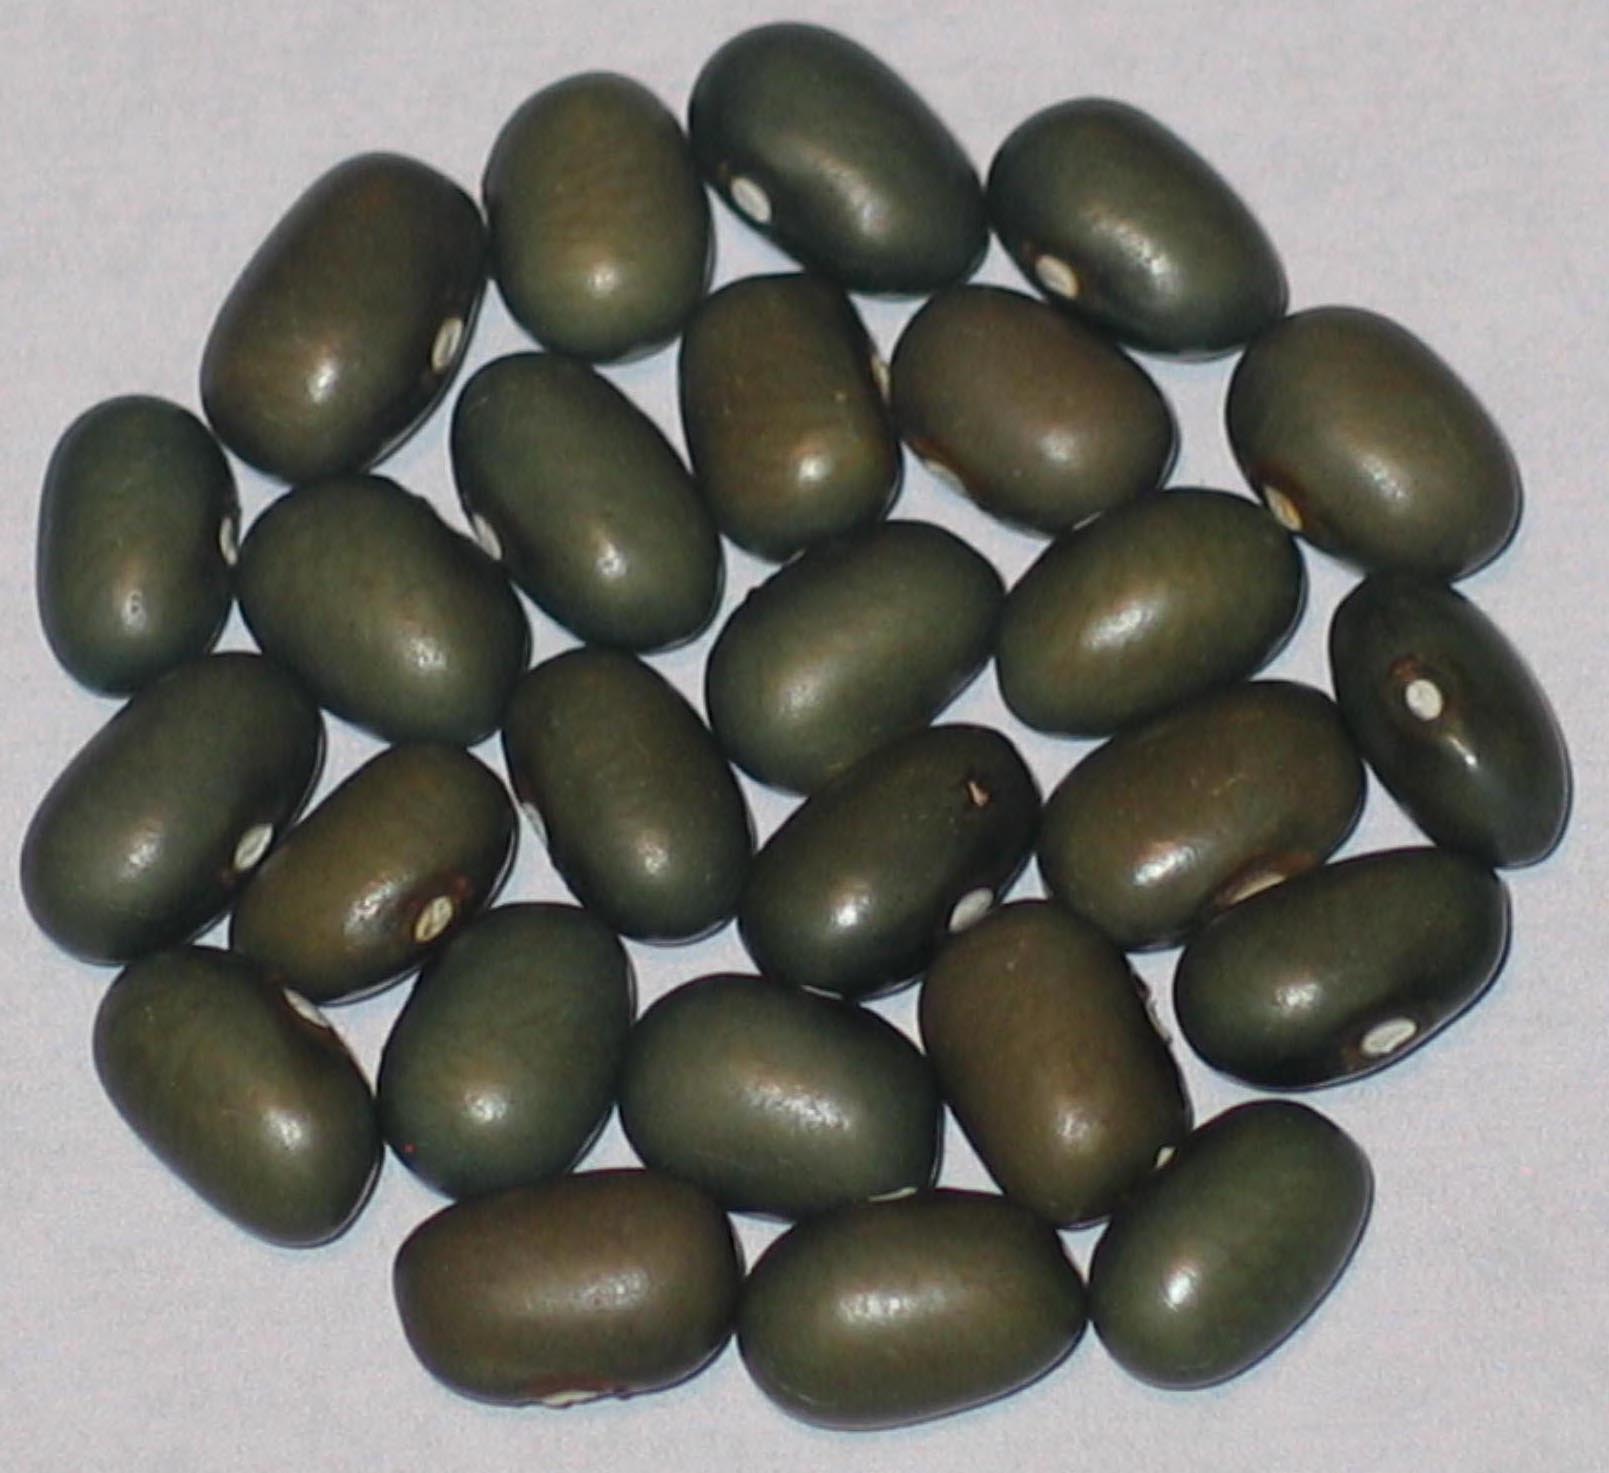 image of Malawi Pinto beans